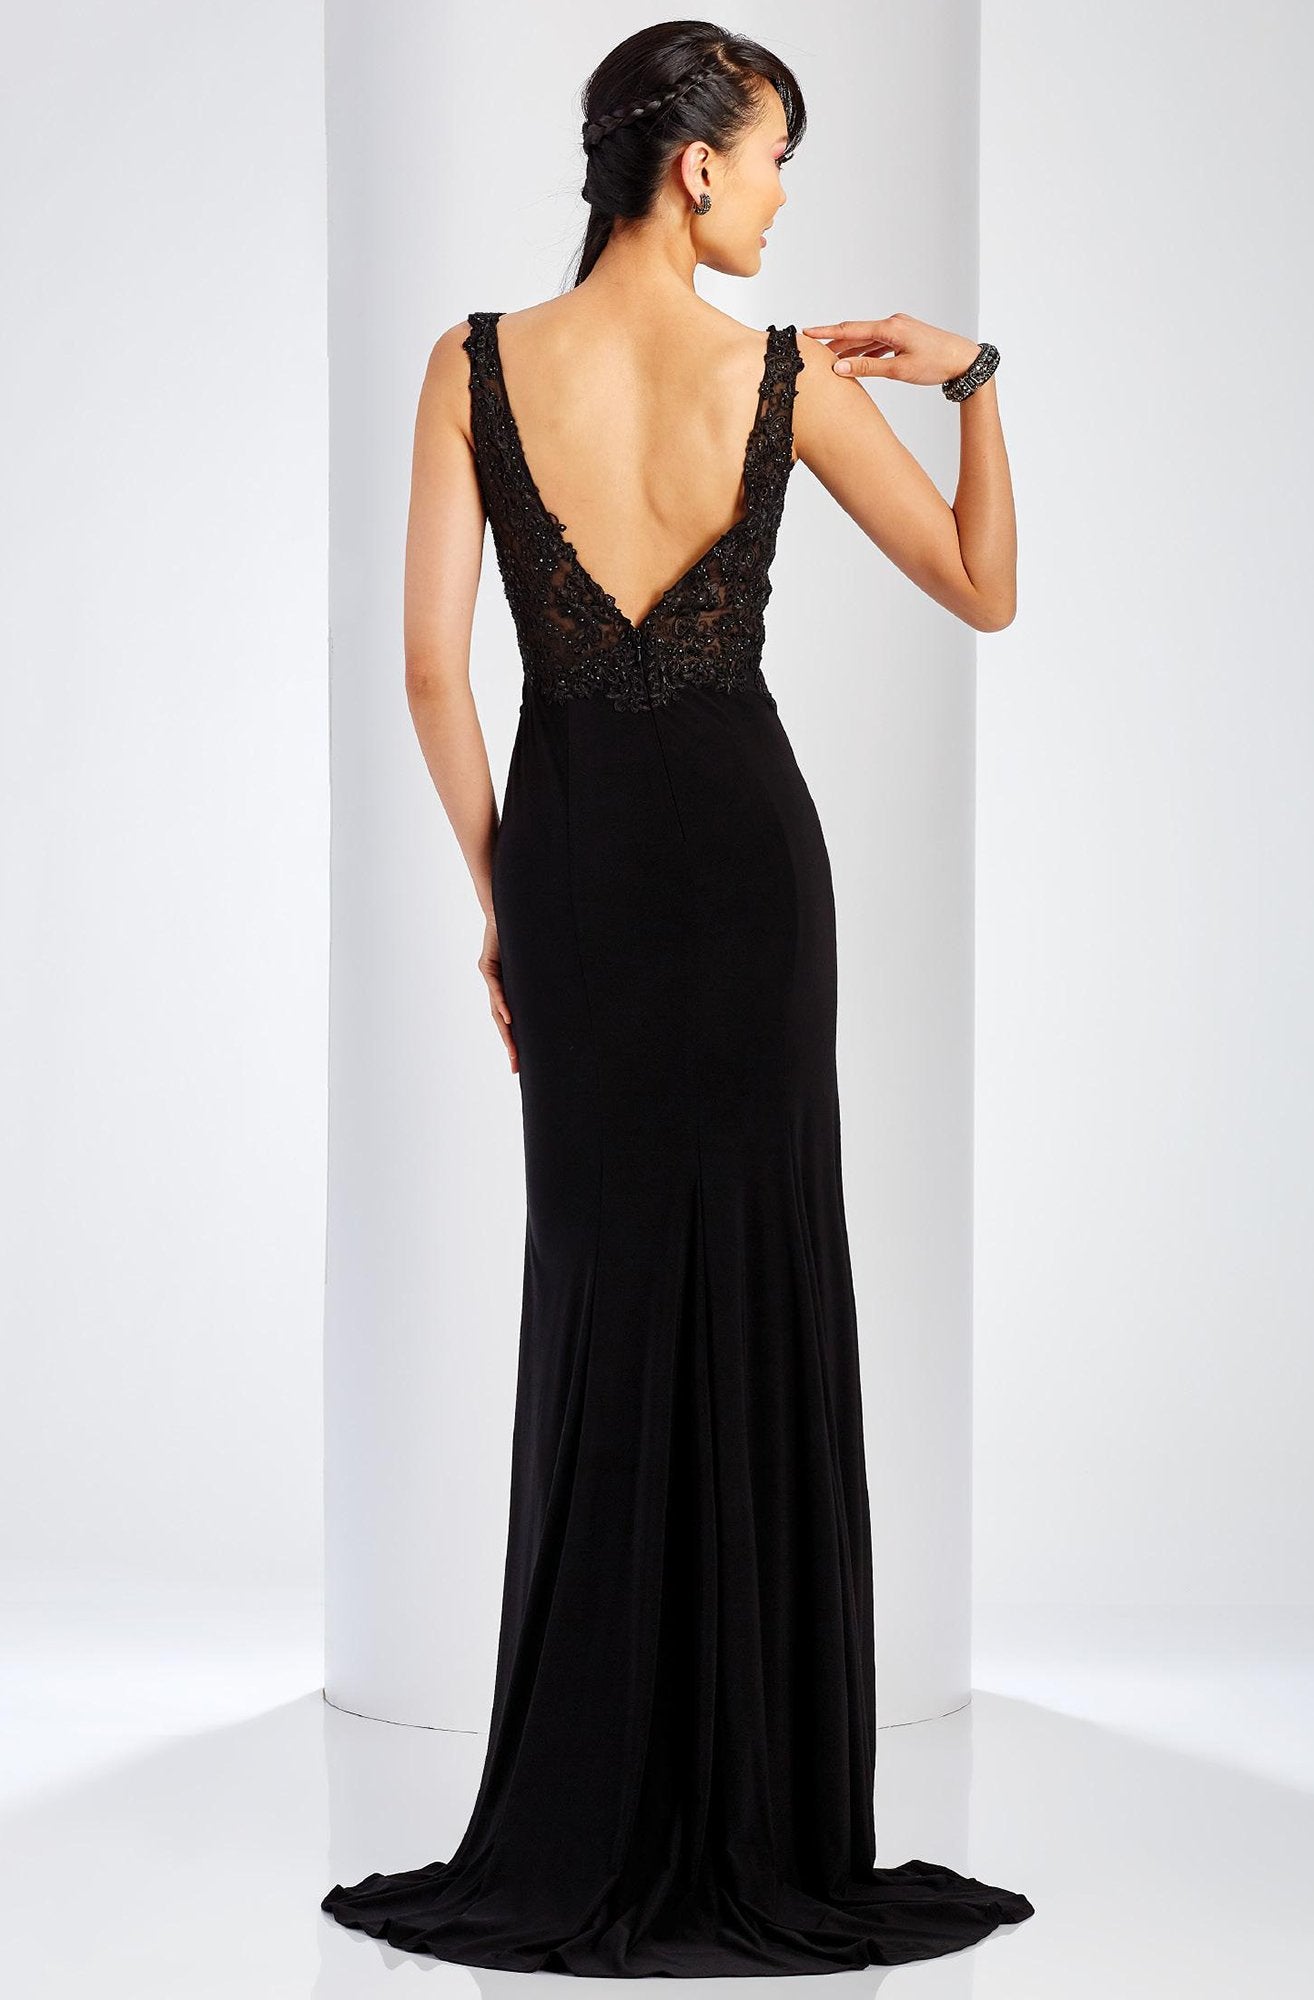 Clarisse - 3575 Lace Scoop Sheath Dress in Black